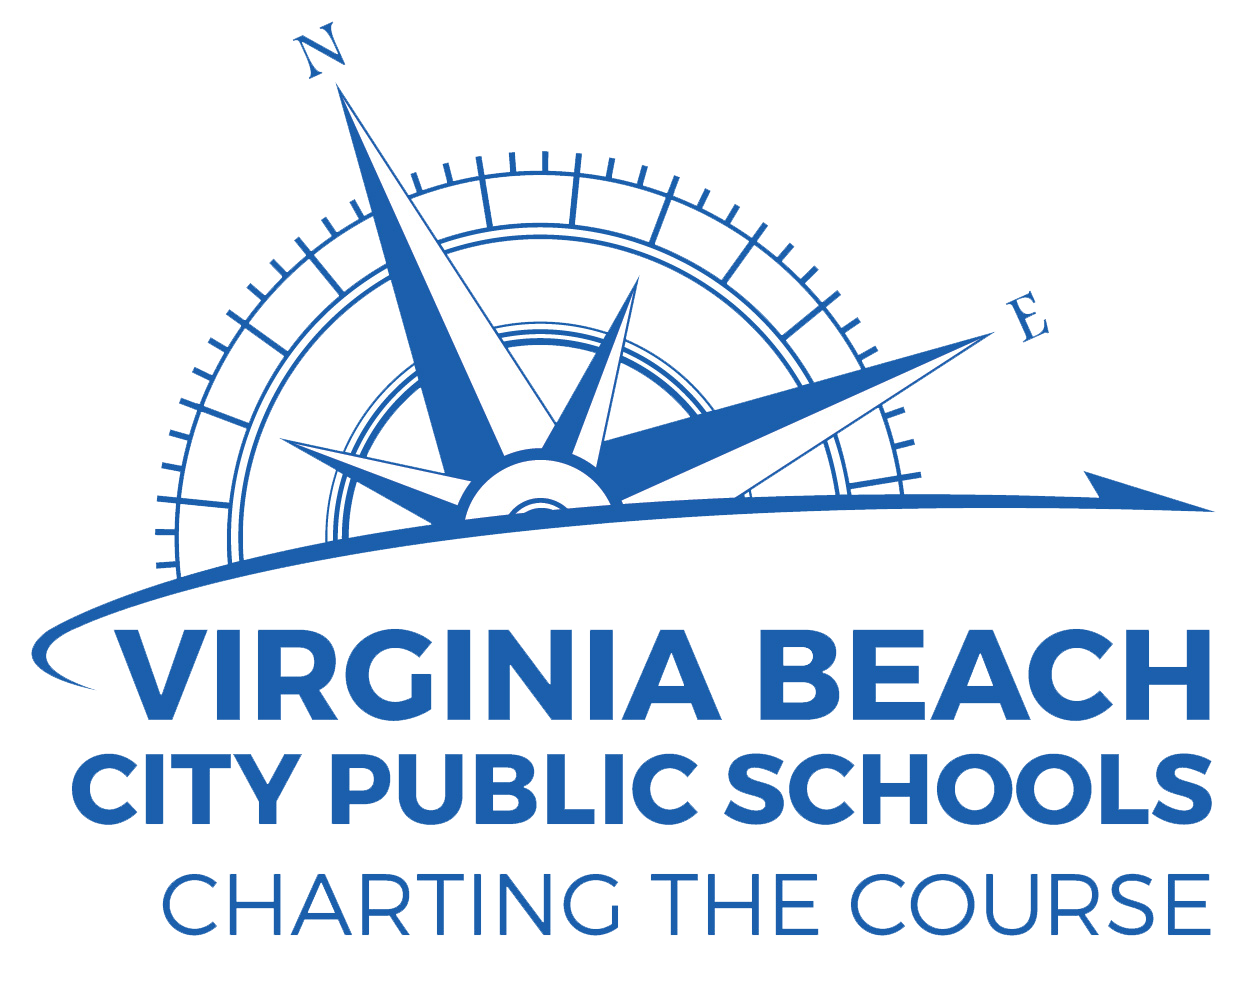 Virginia Beach City Public Schools Charting The Course